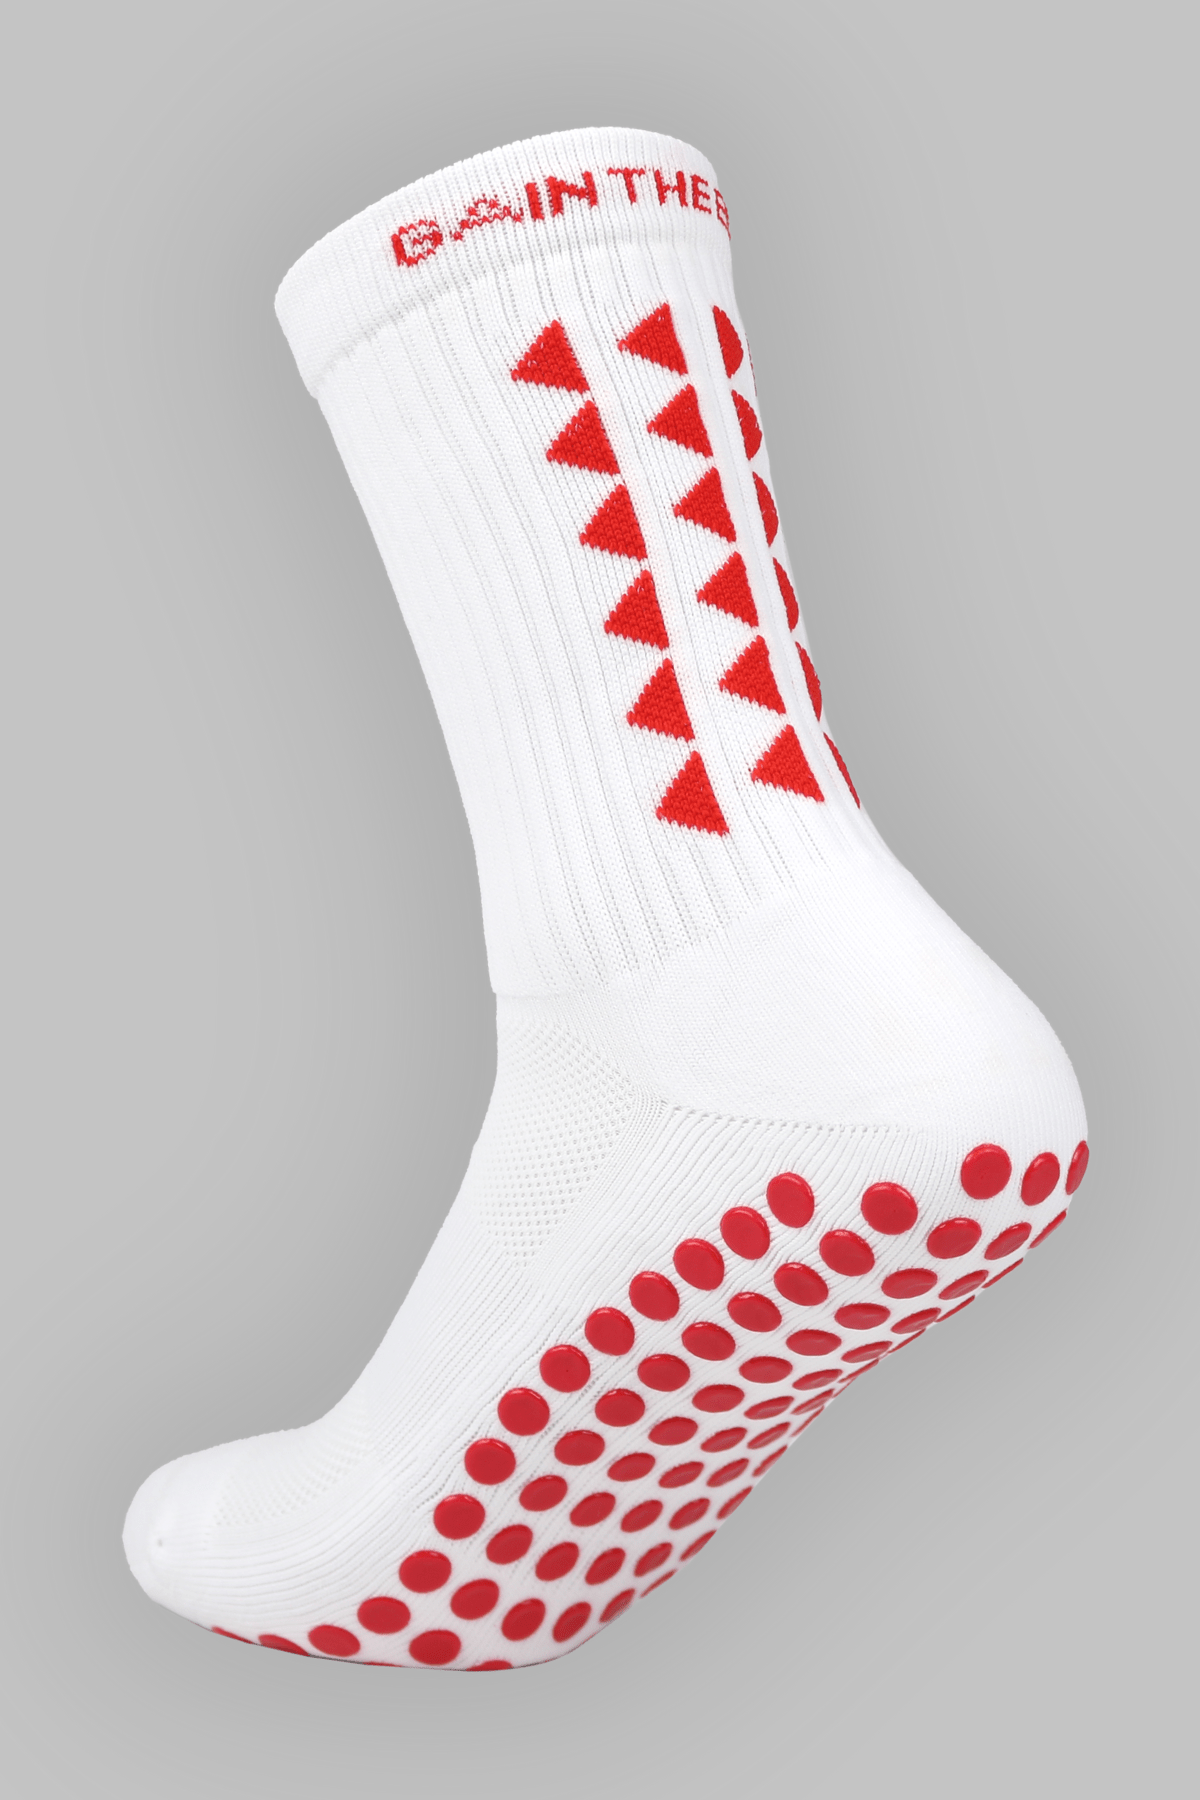 Grip Socks 2.0 - Midcalf Length - Gain The Edge EU